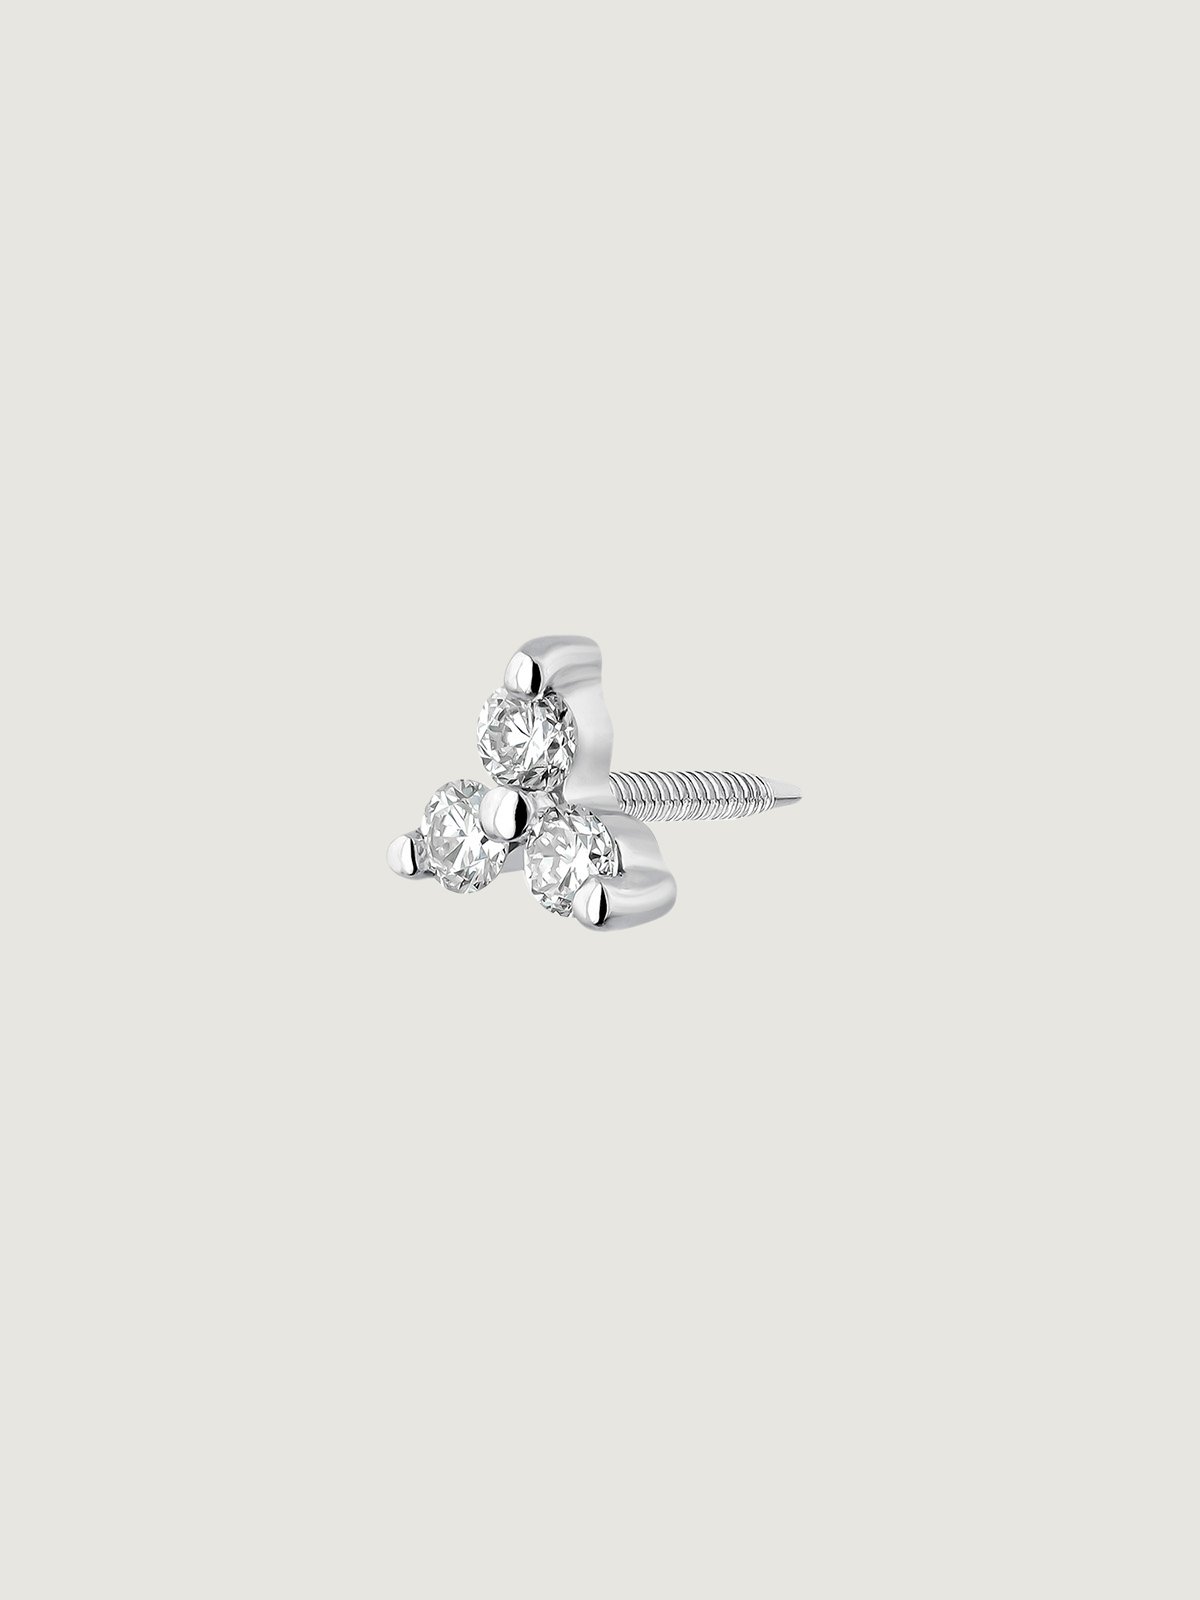 18k white gold piercing with diamond clover